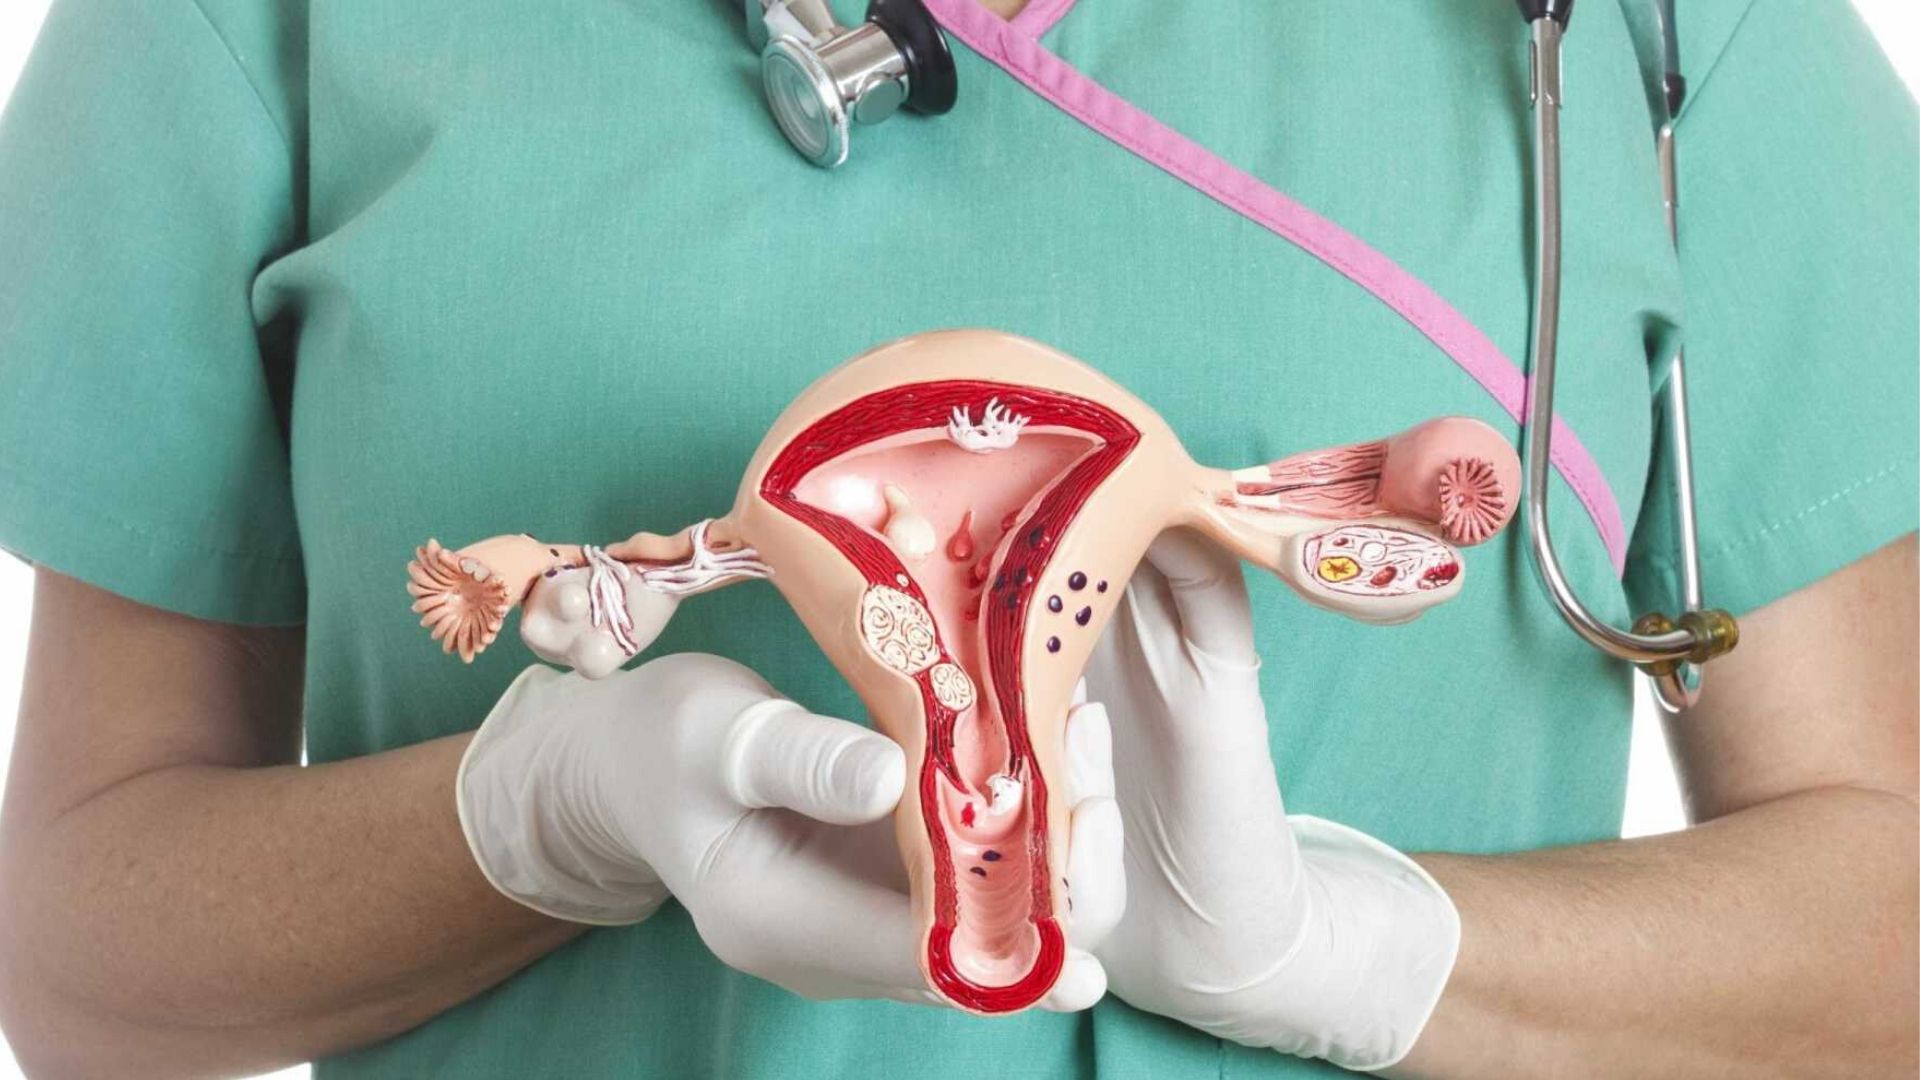 hysteroscopy bladder image shows doctor